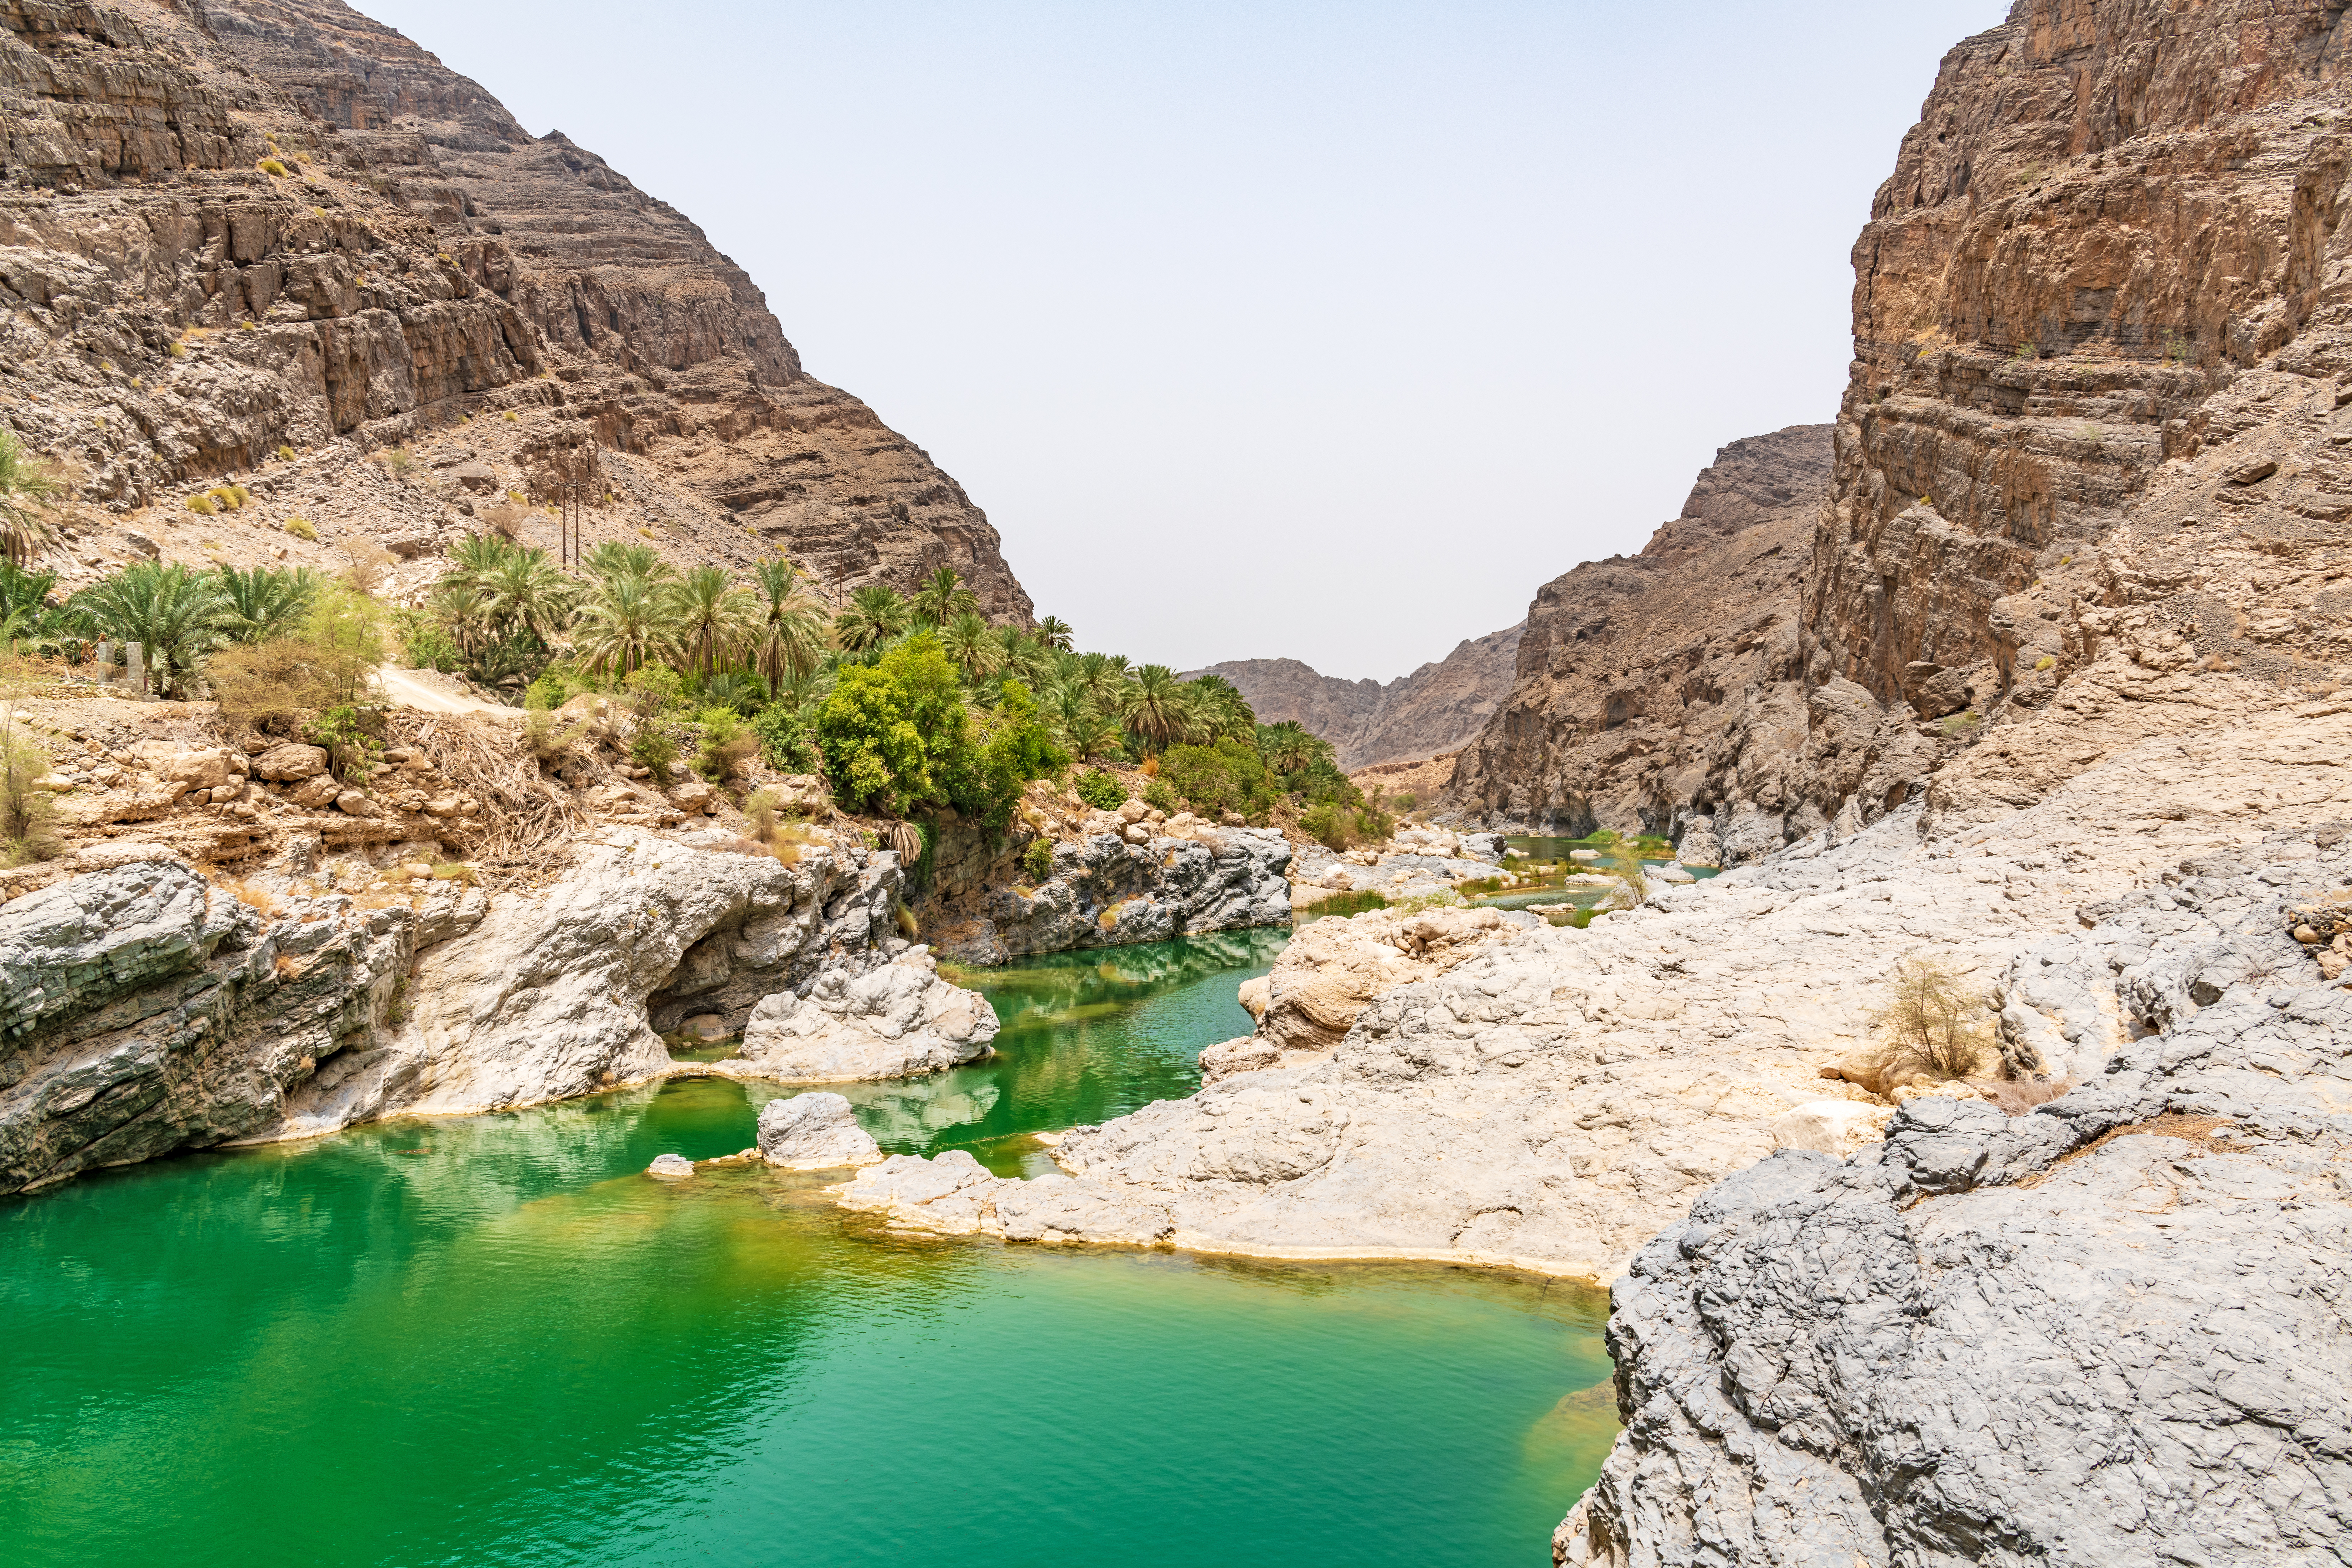 Wadi Al Arbeieen in the Eastern Muscat Oman